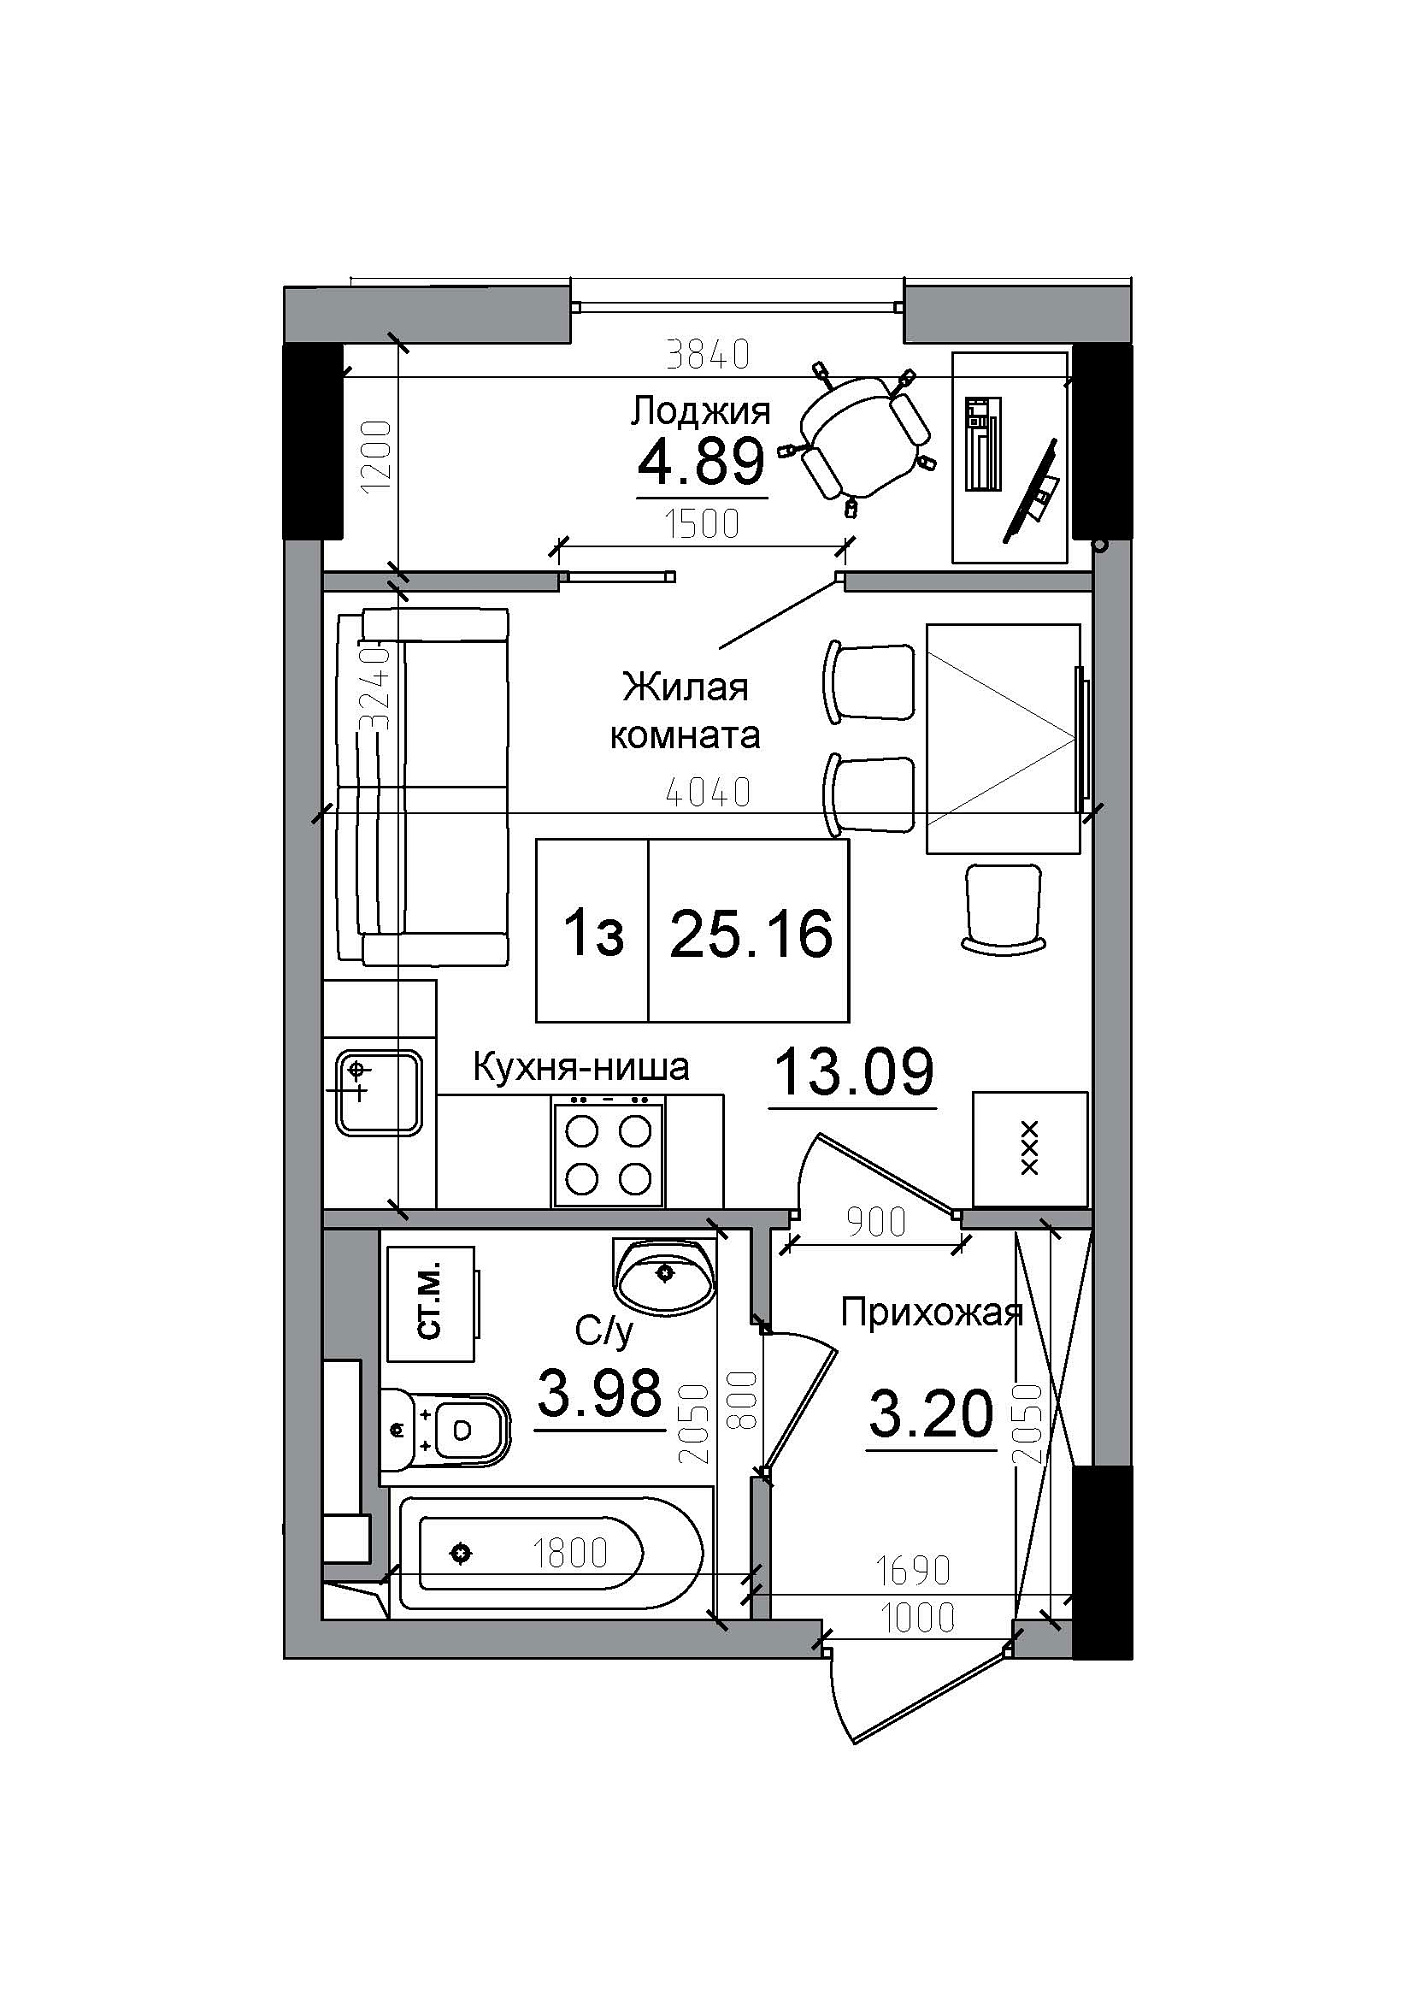 Planning Smart flats area 25.16m2, AB-12-07/00009.